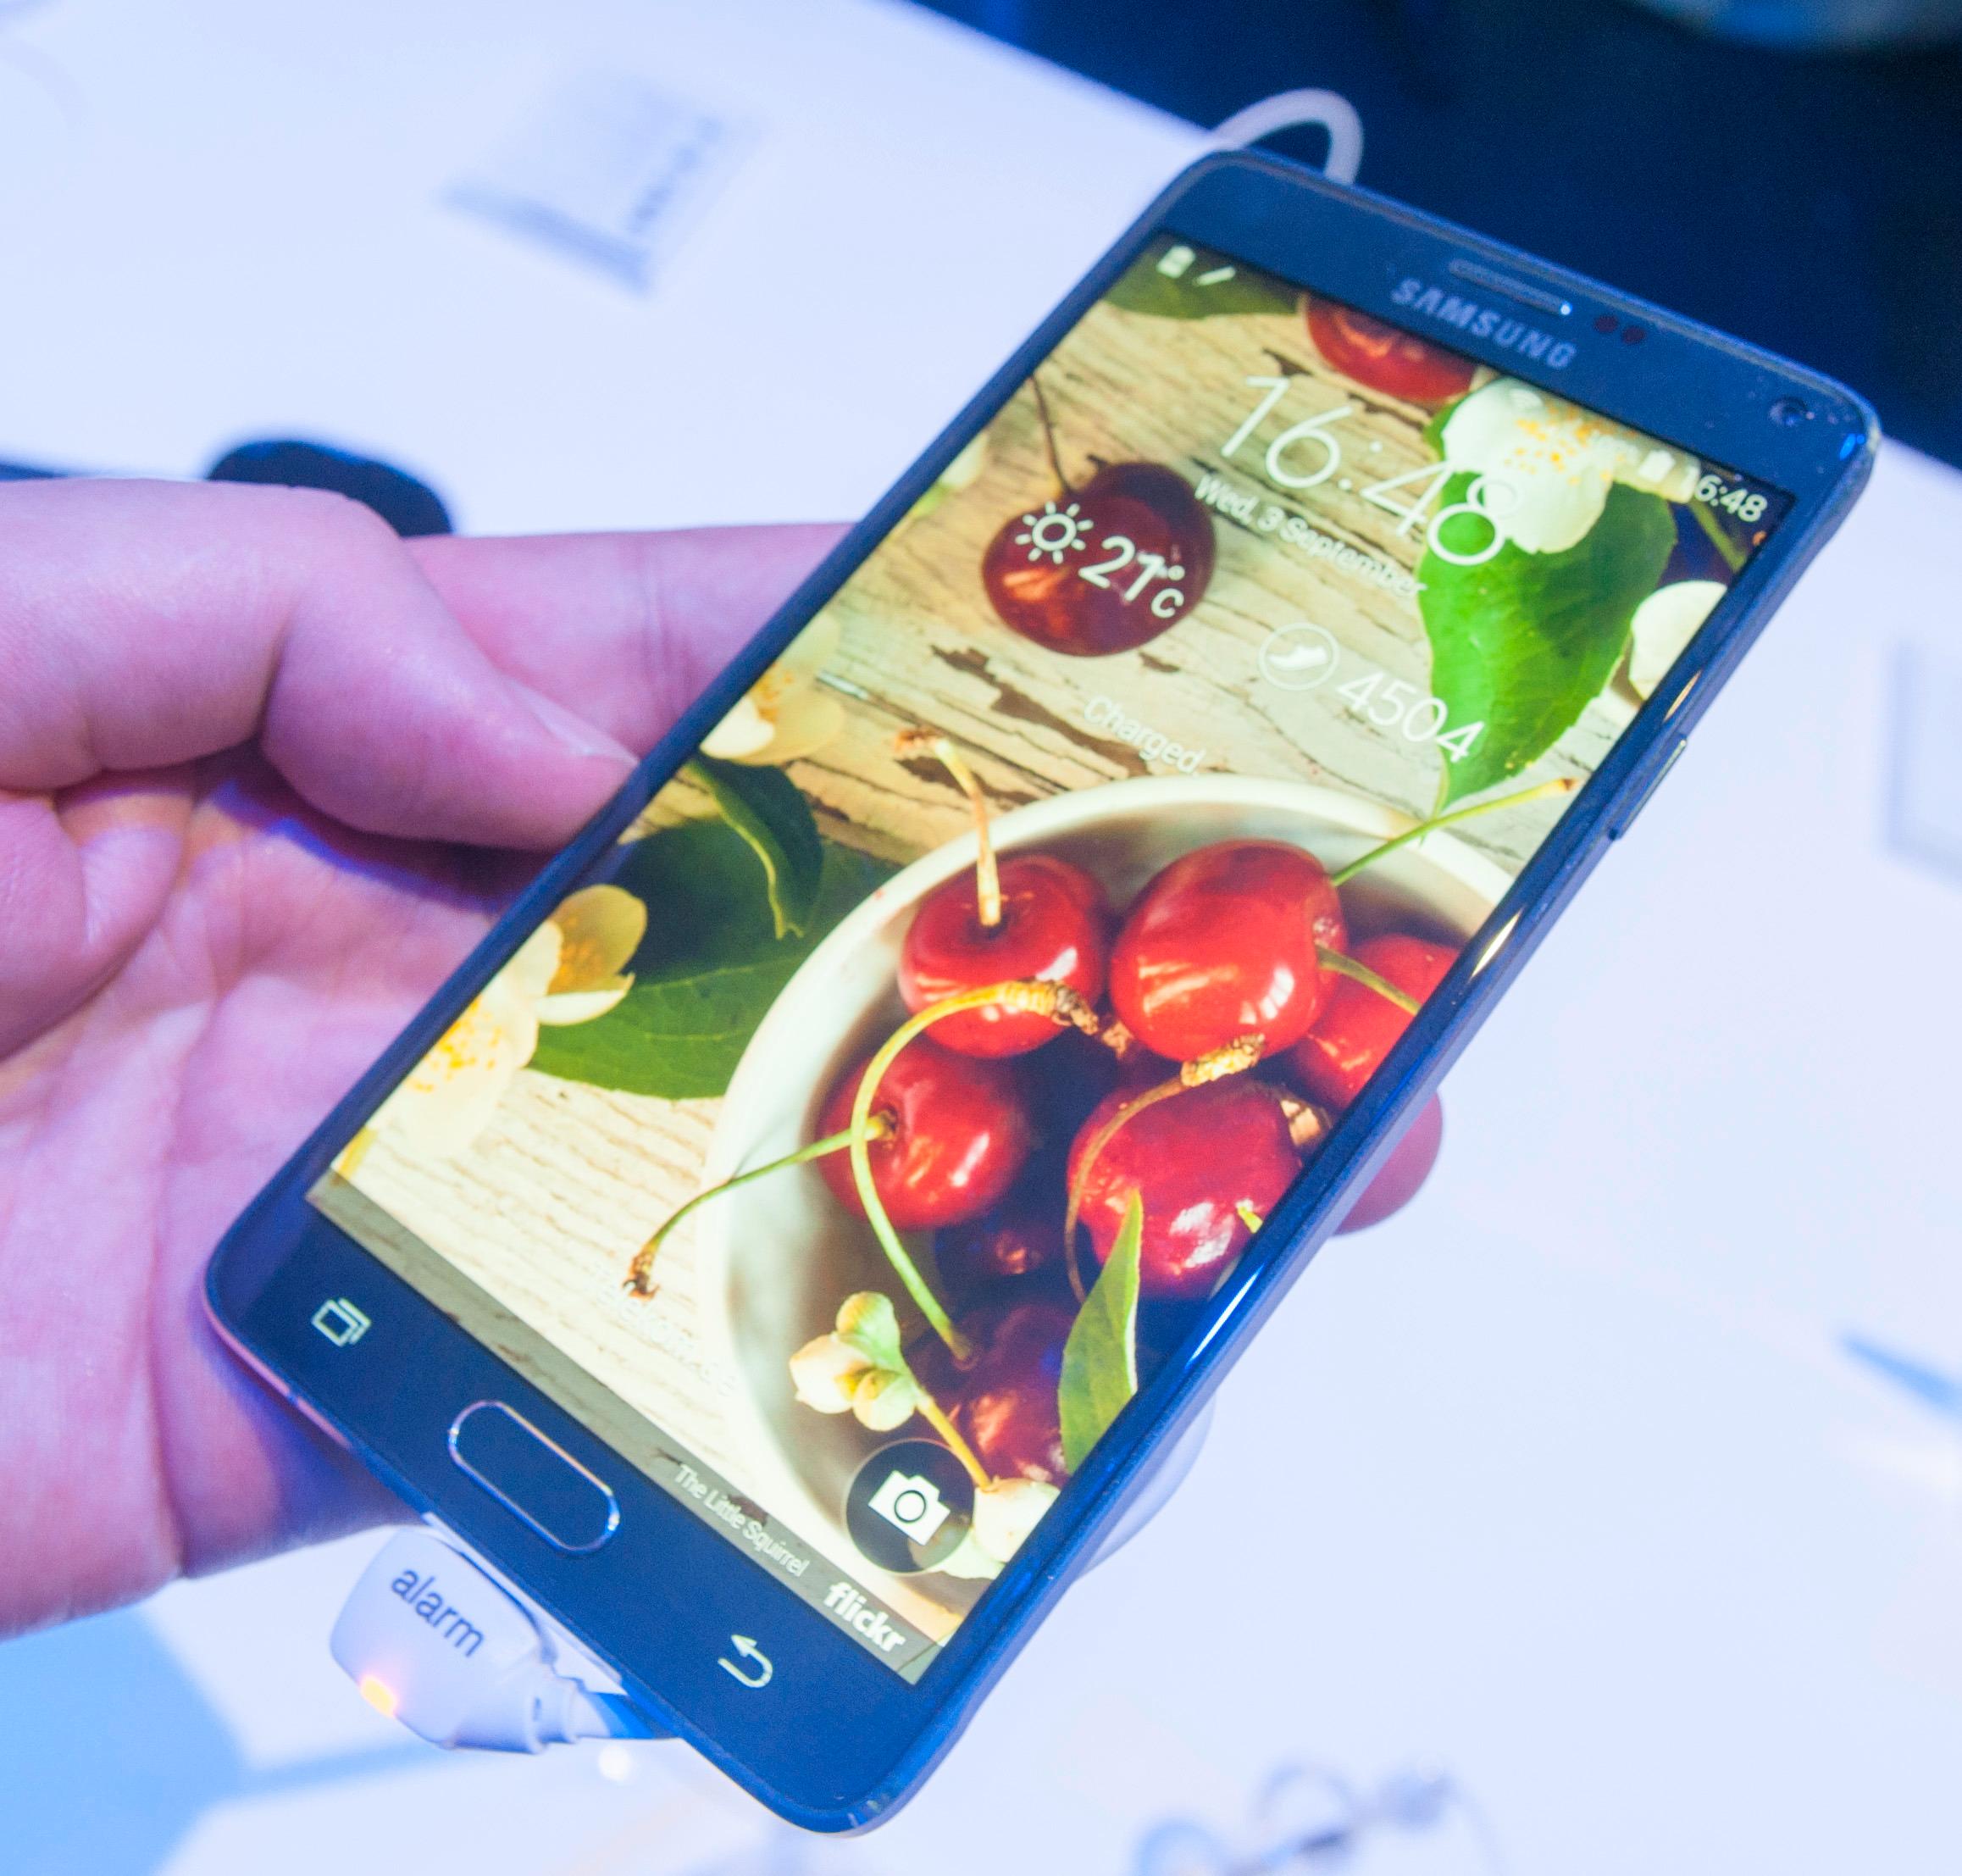 Analytikerne nedjusterer forventningene, samtidig er Samsungs Galaxy Note 4 utsolgt på det sør-koreanske forhåndssalget.Foto: Finn Jarle Kvalheim, Tek.no